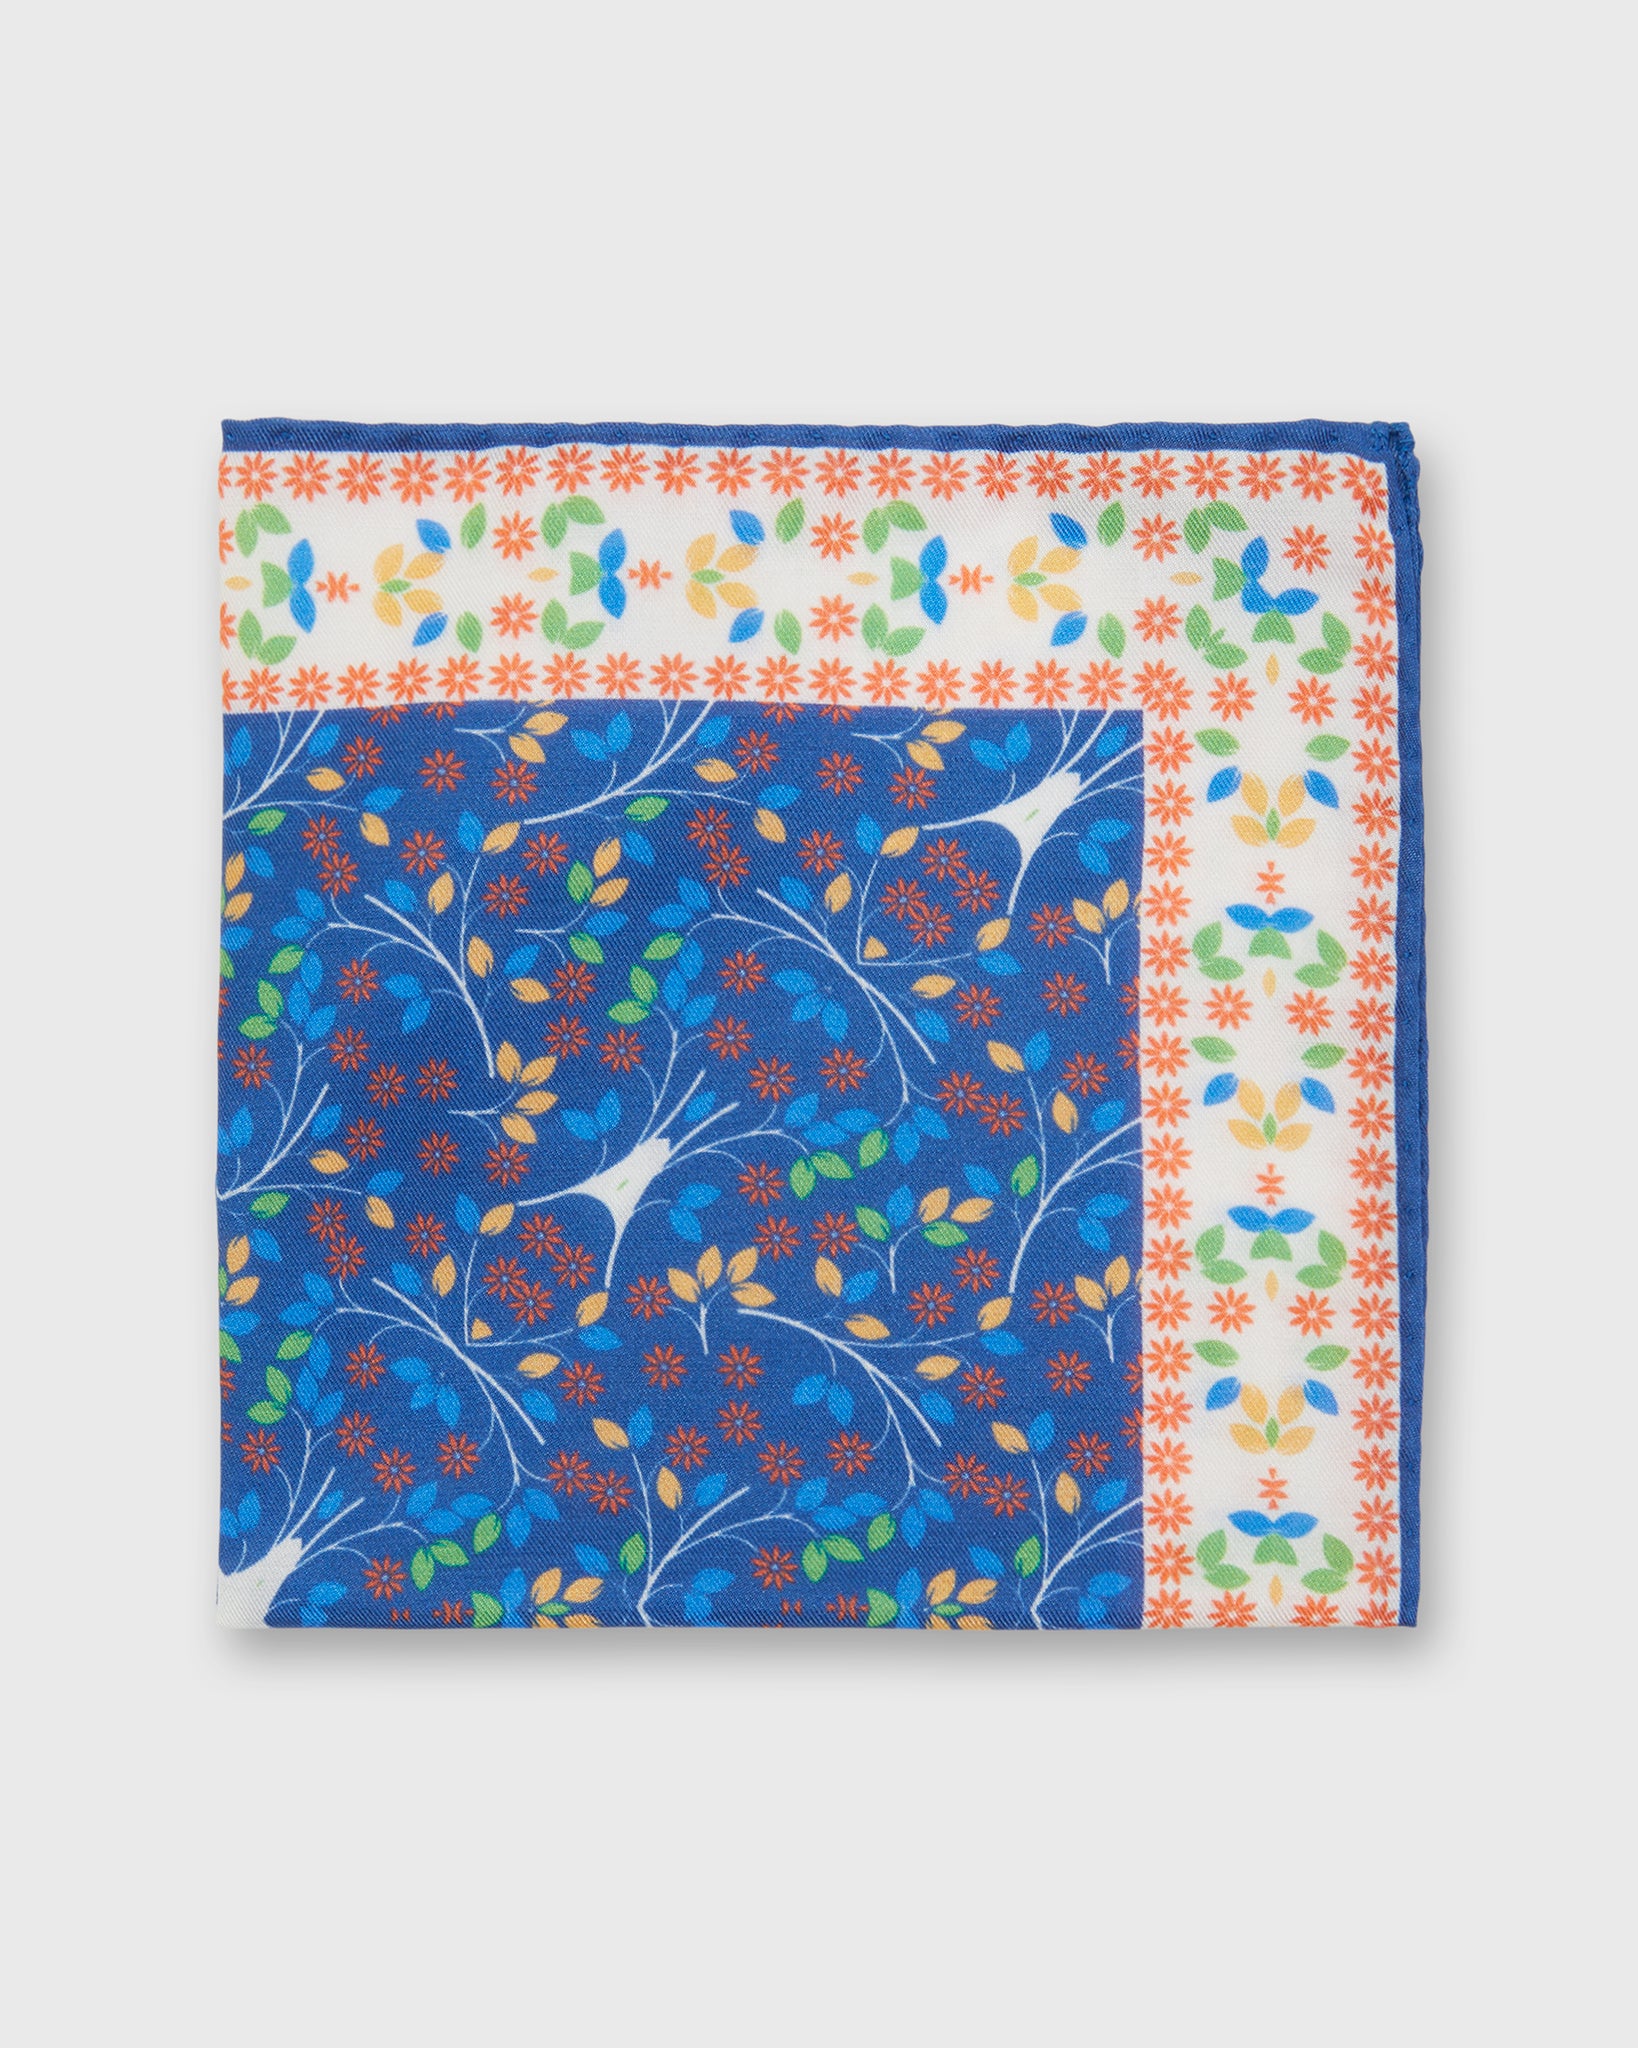 Cotton/Linen Print Pocket Square in Blue/Orange Multi Florals